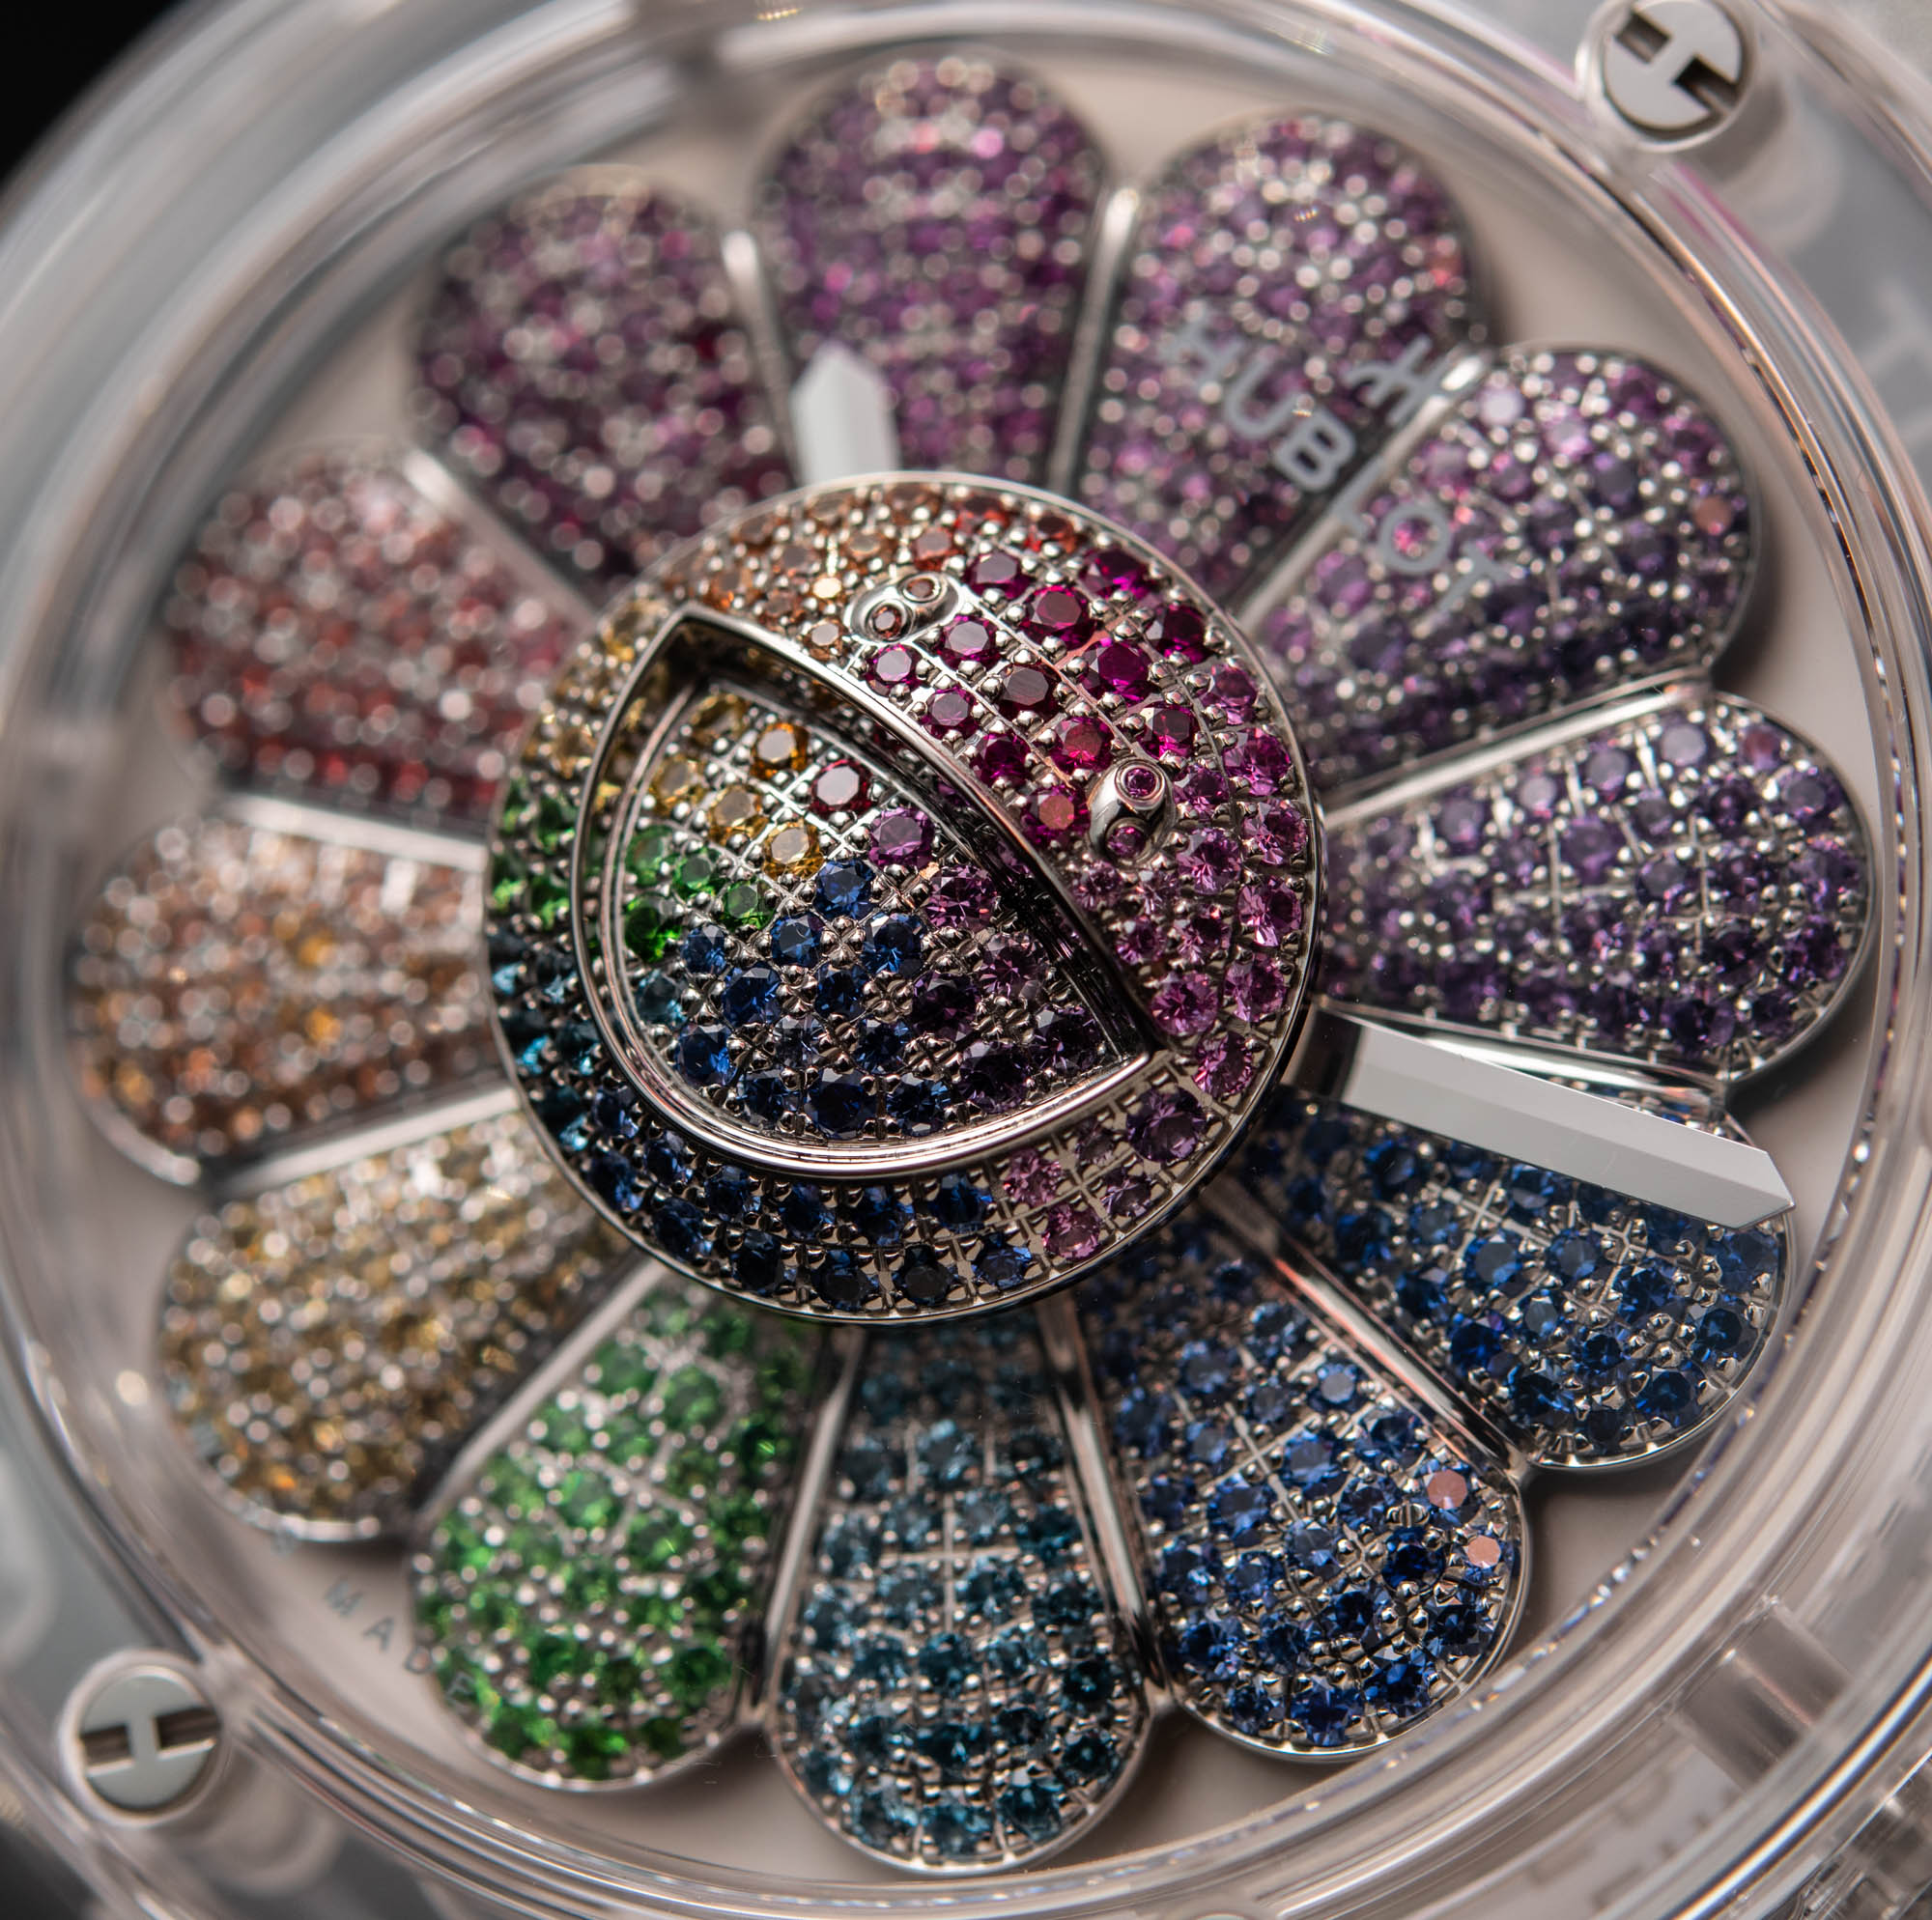 Hublot And Takashi Murakami Unveil Unique Rainbow Gemstone Watch, NFT